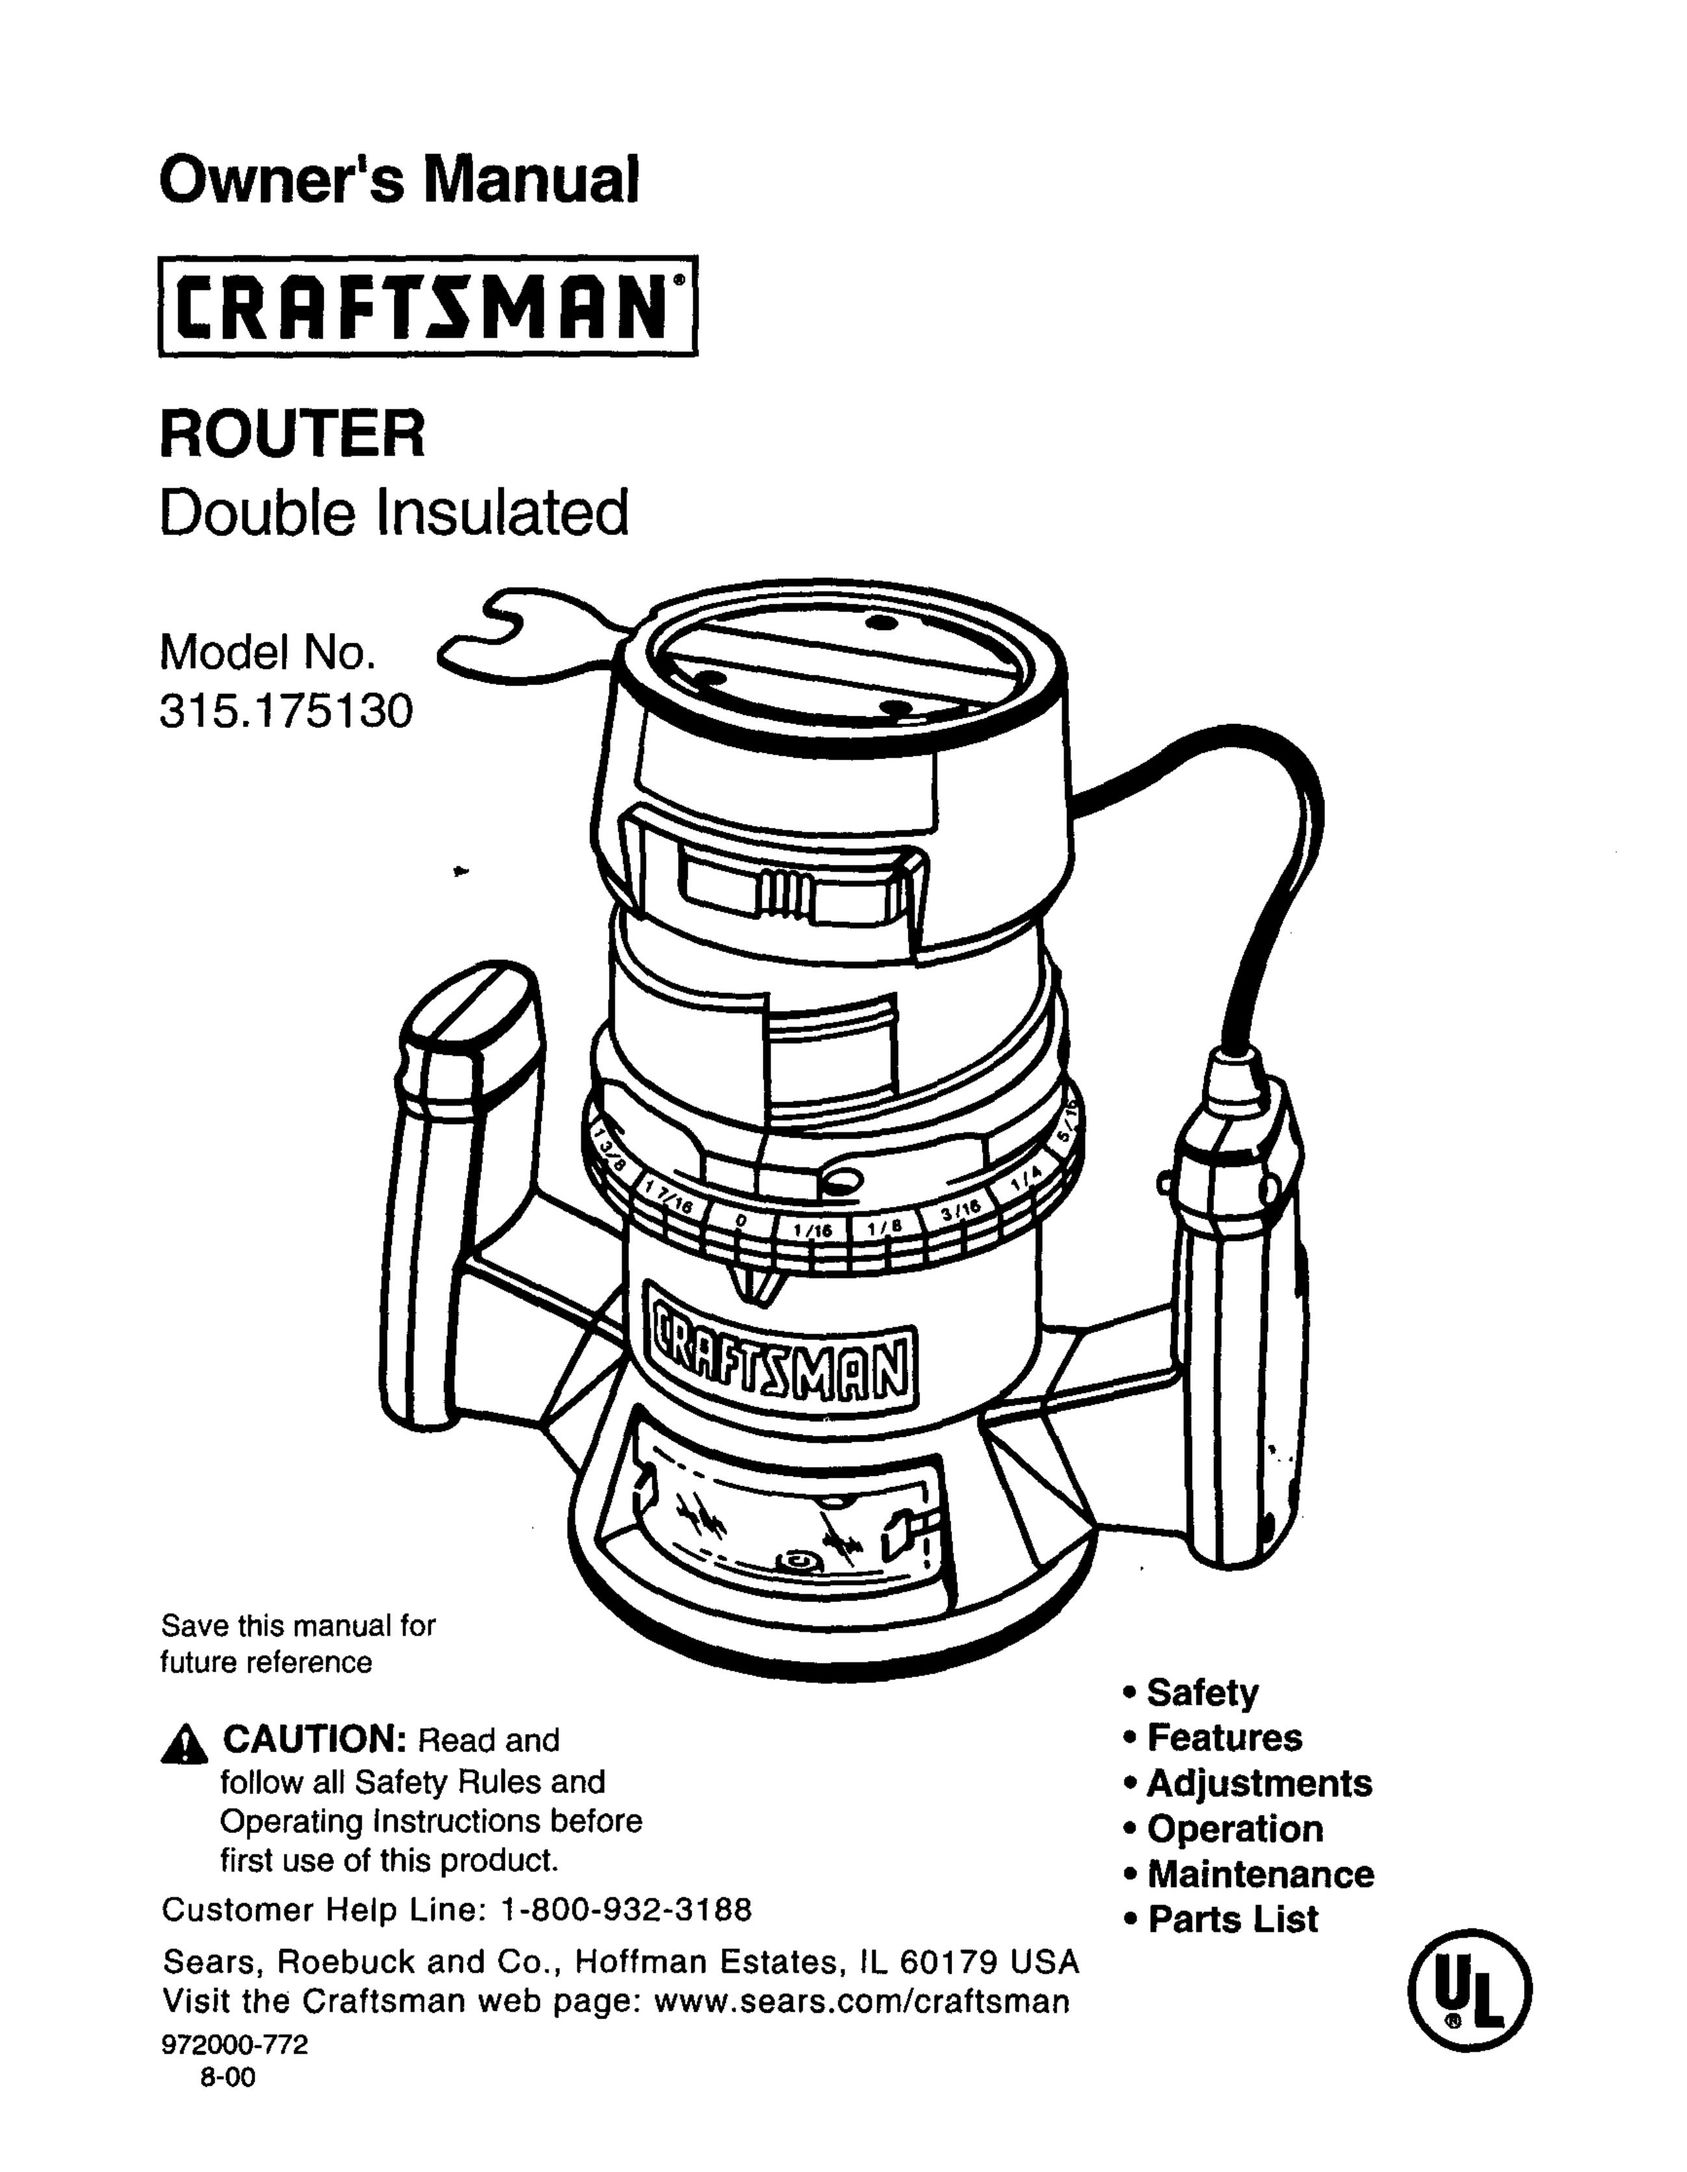 Craftsman 315.17513 Router User Manual